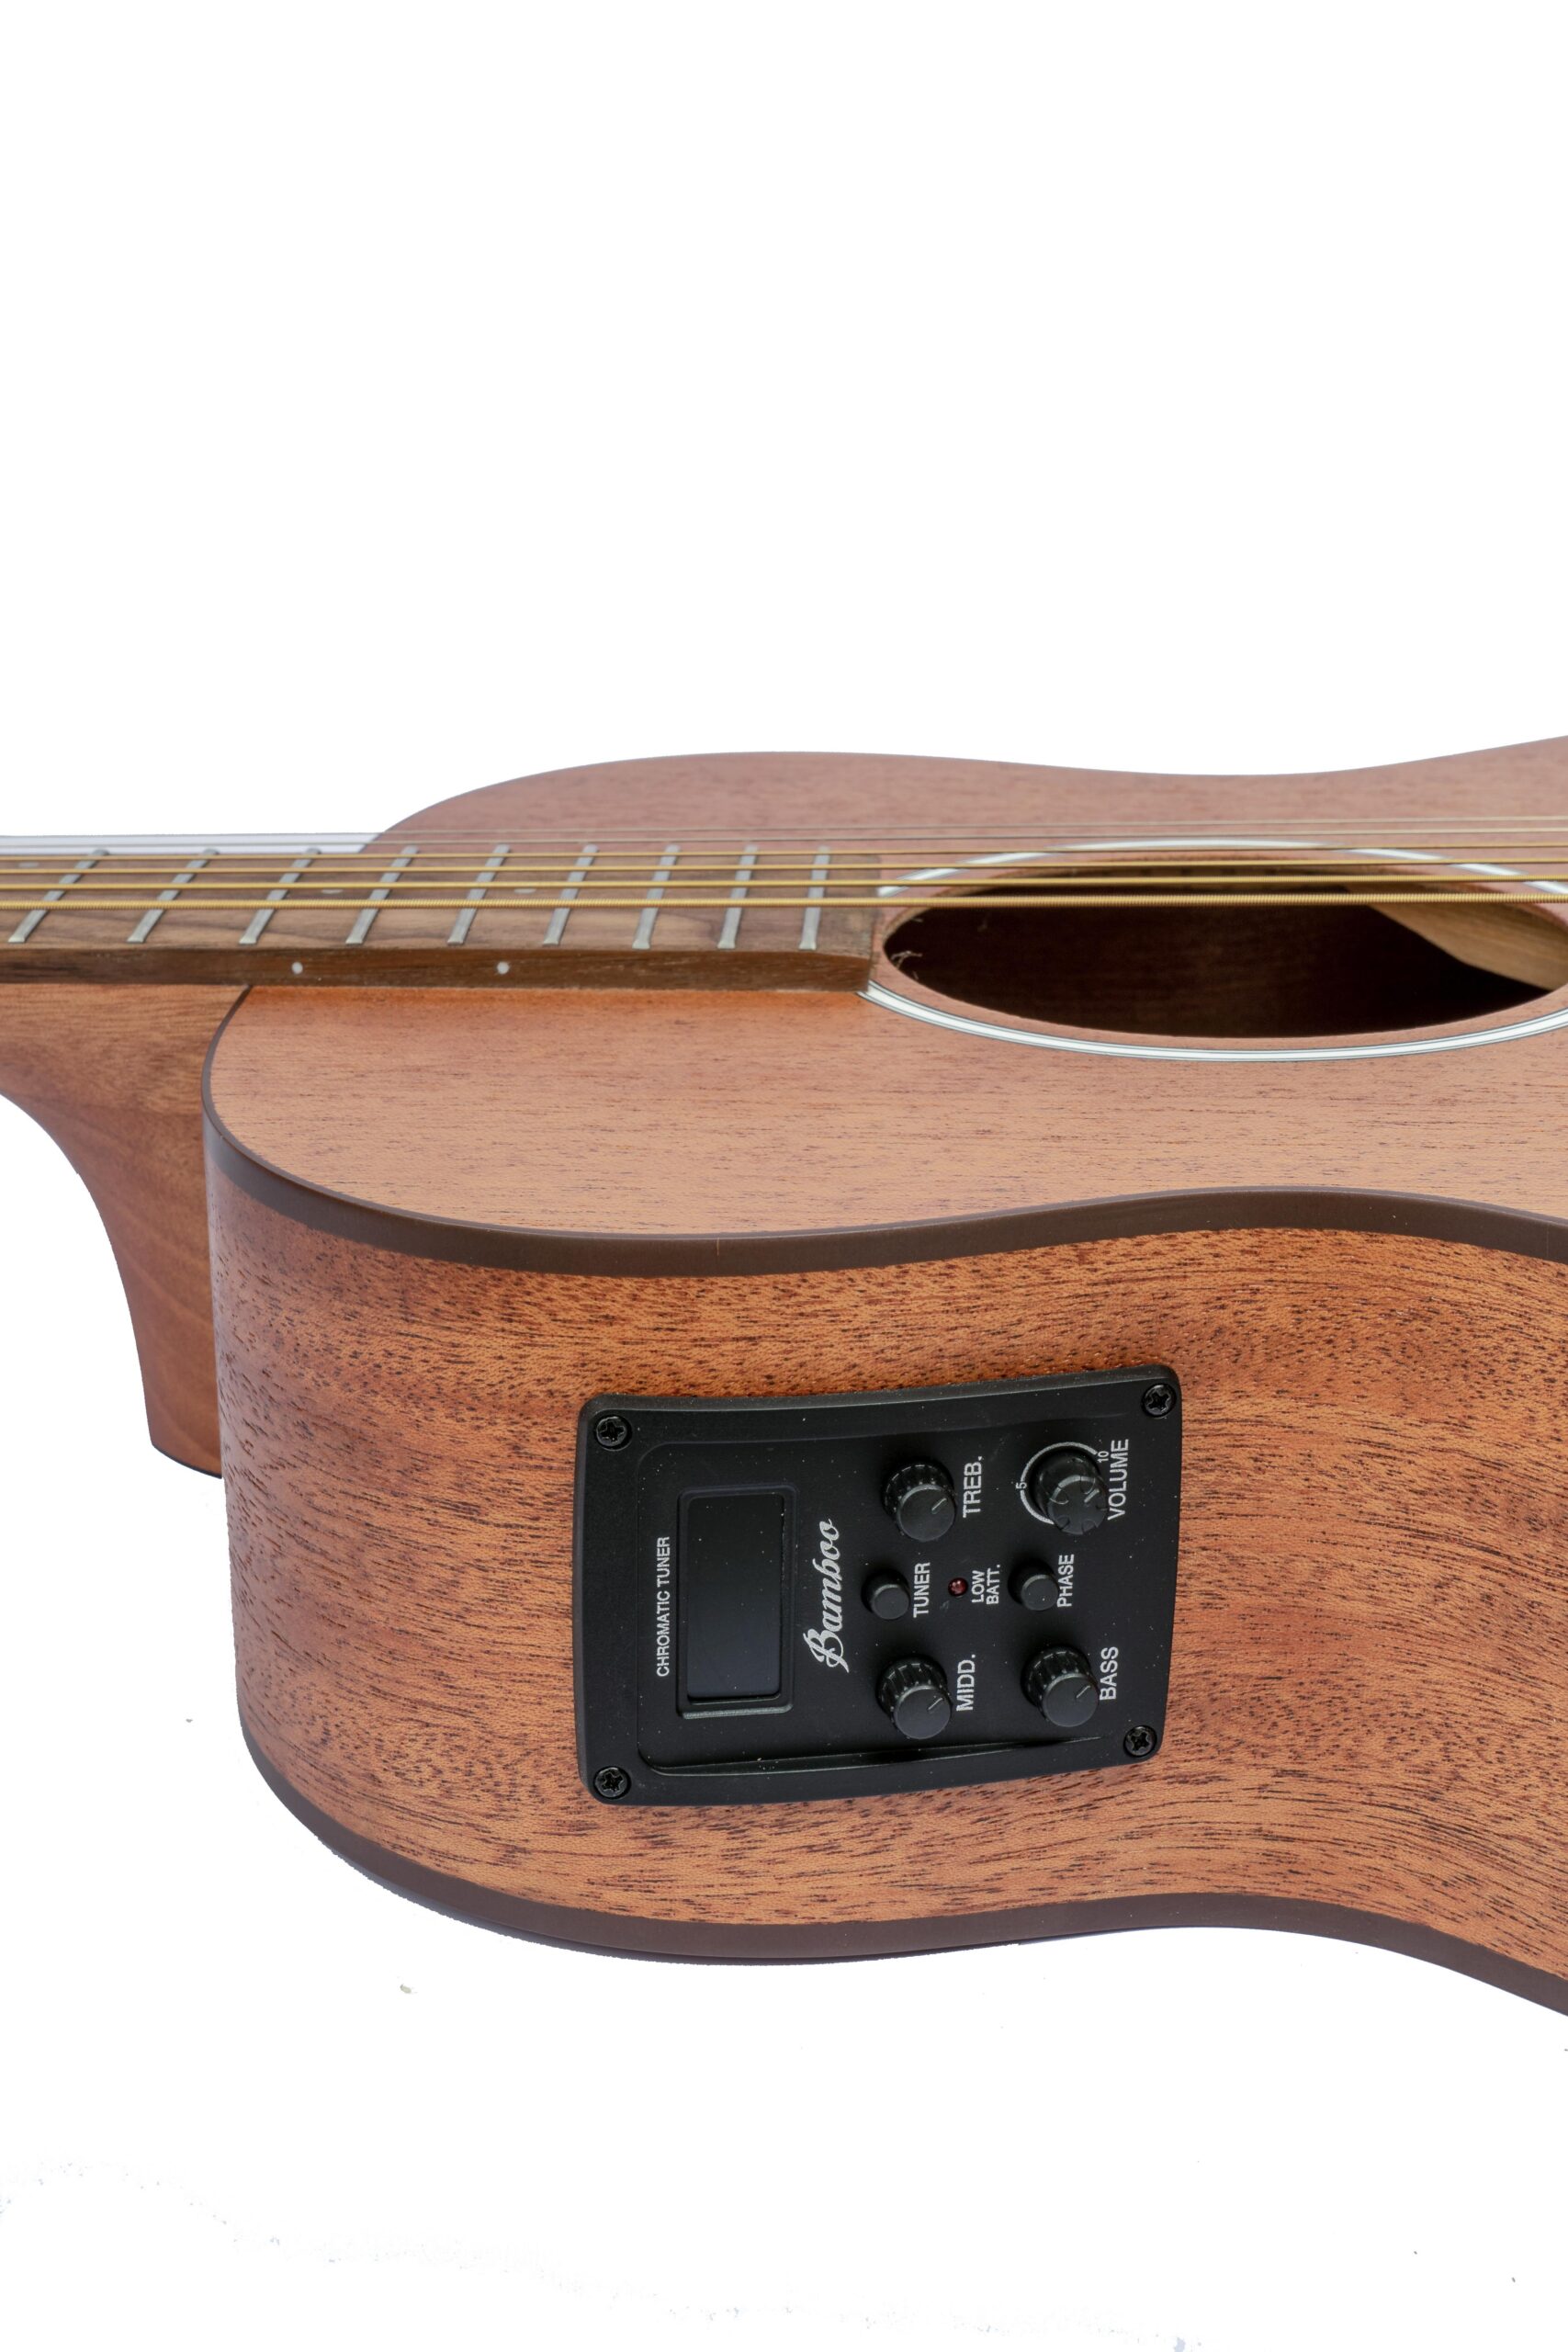 Bamboo Mahogany 38” Acoustic Guitar with Eq